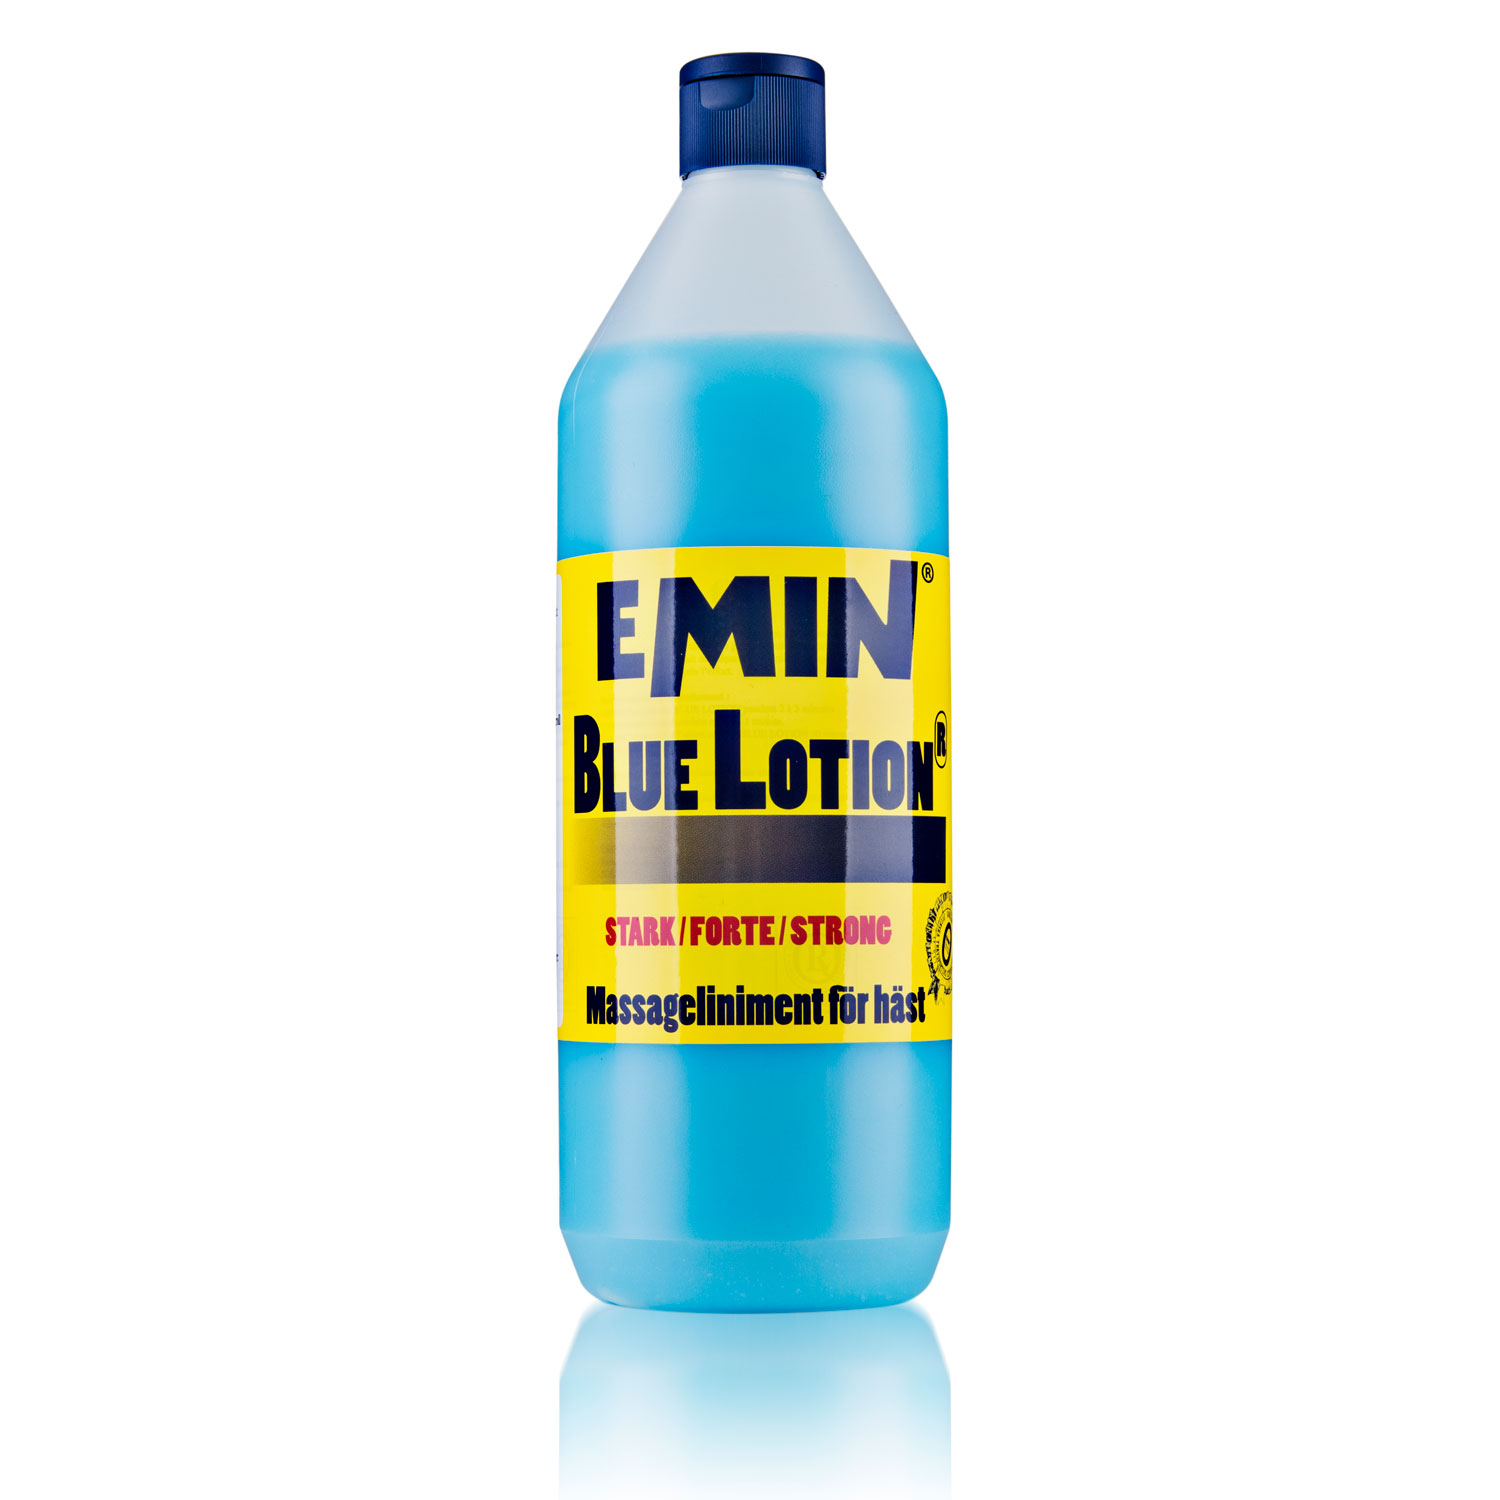 Blue lotion EMIN, 1050 ml